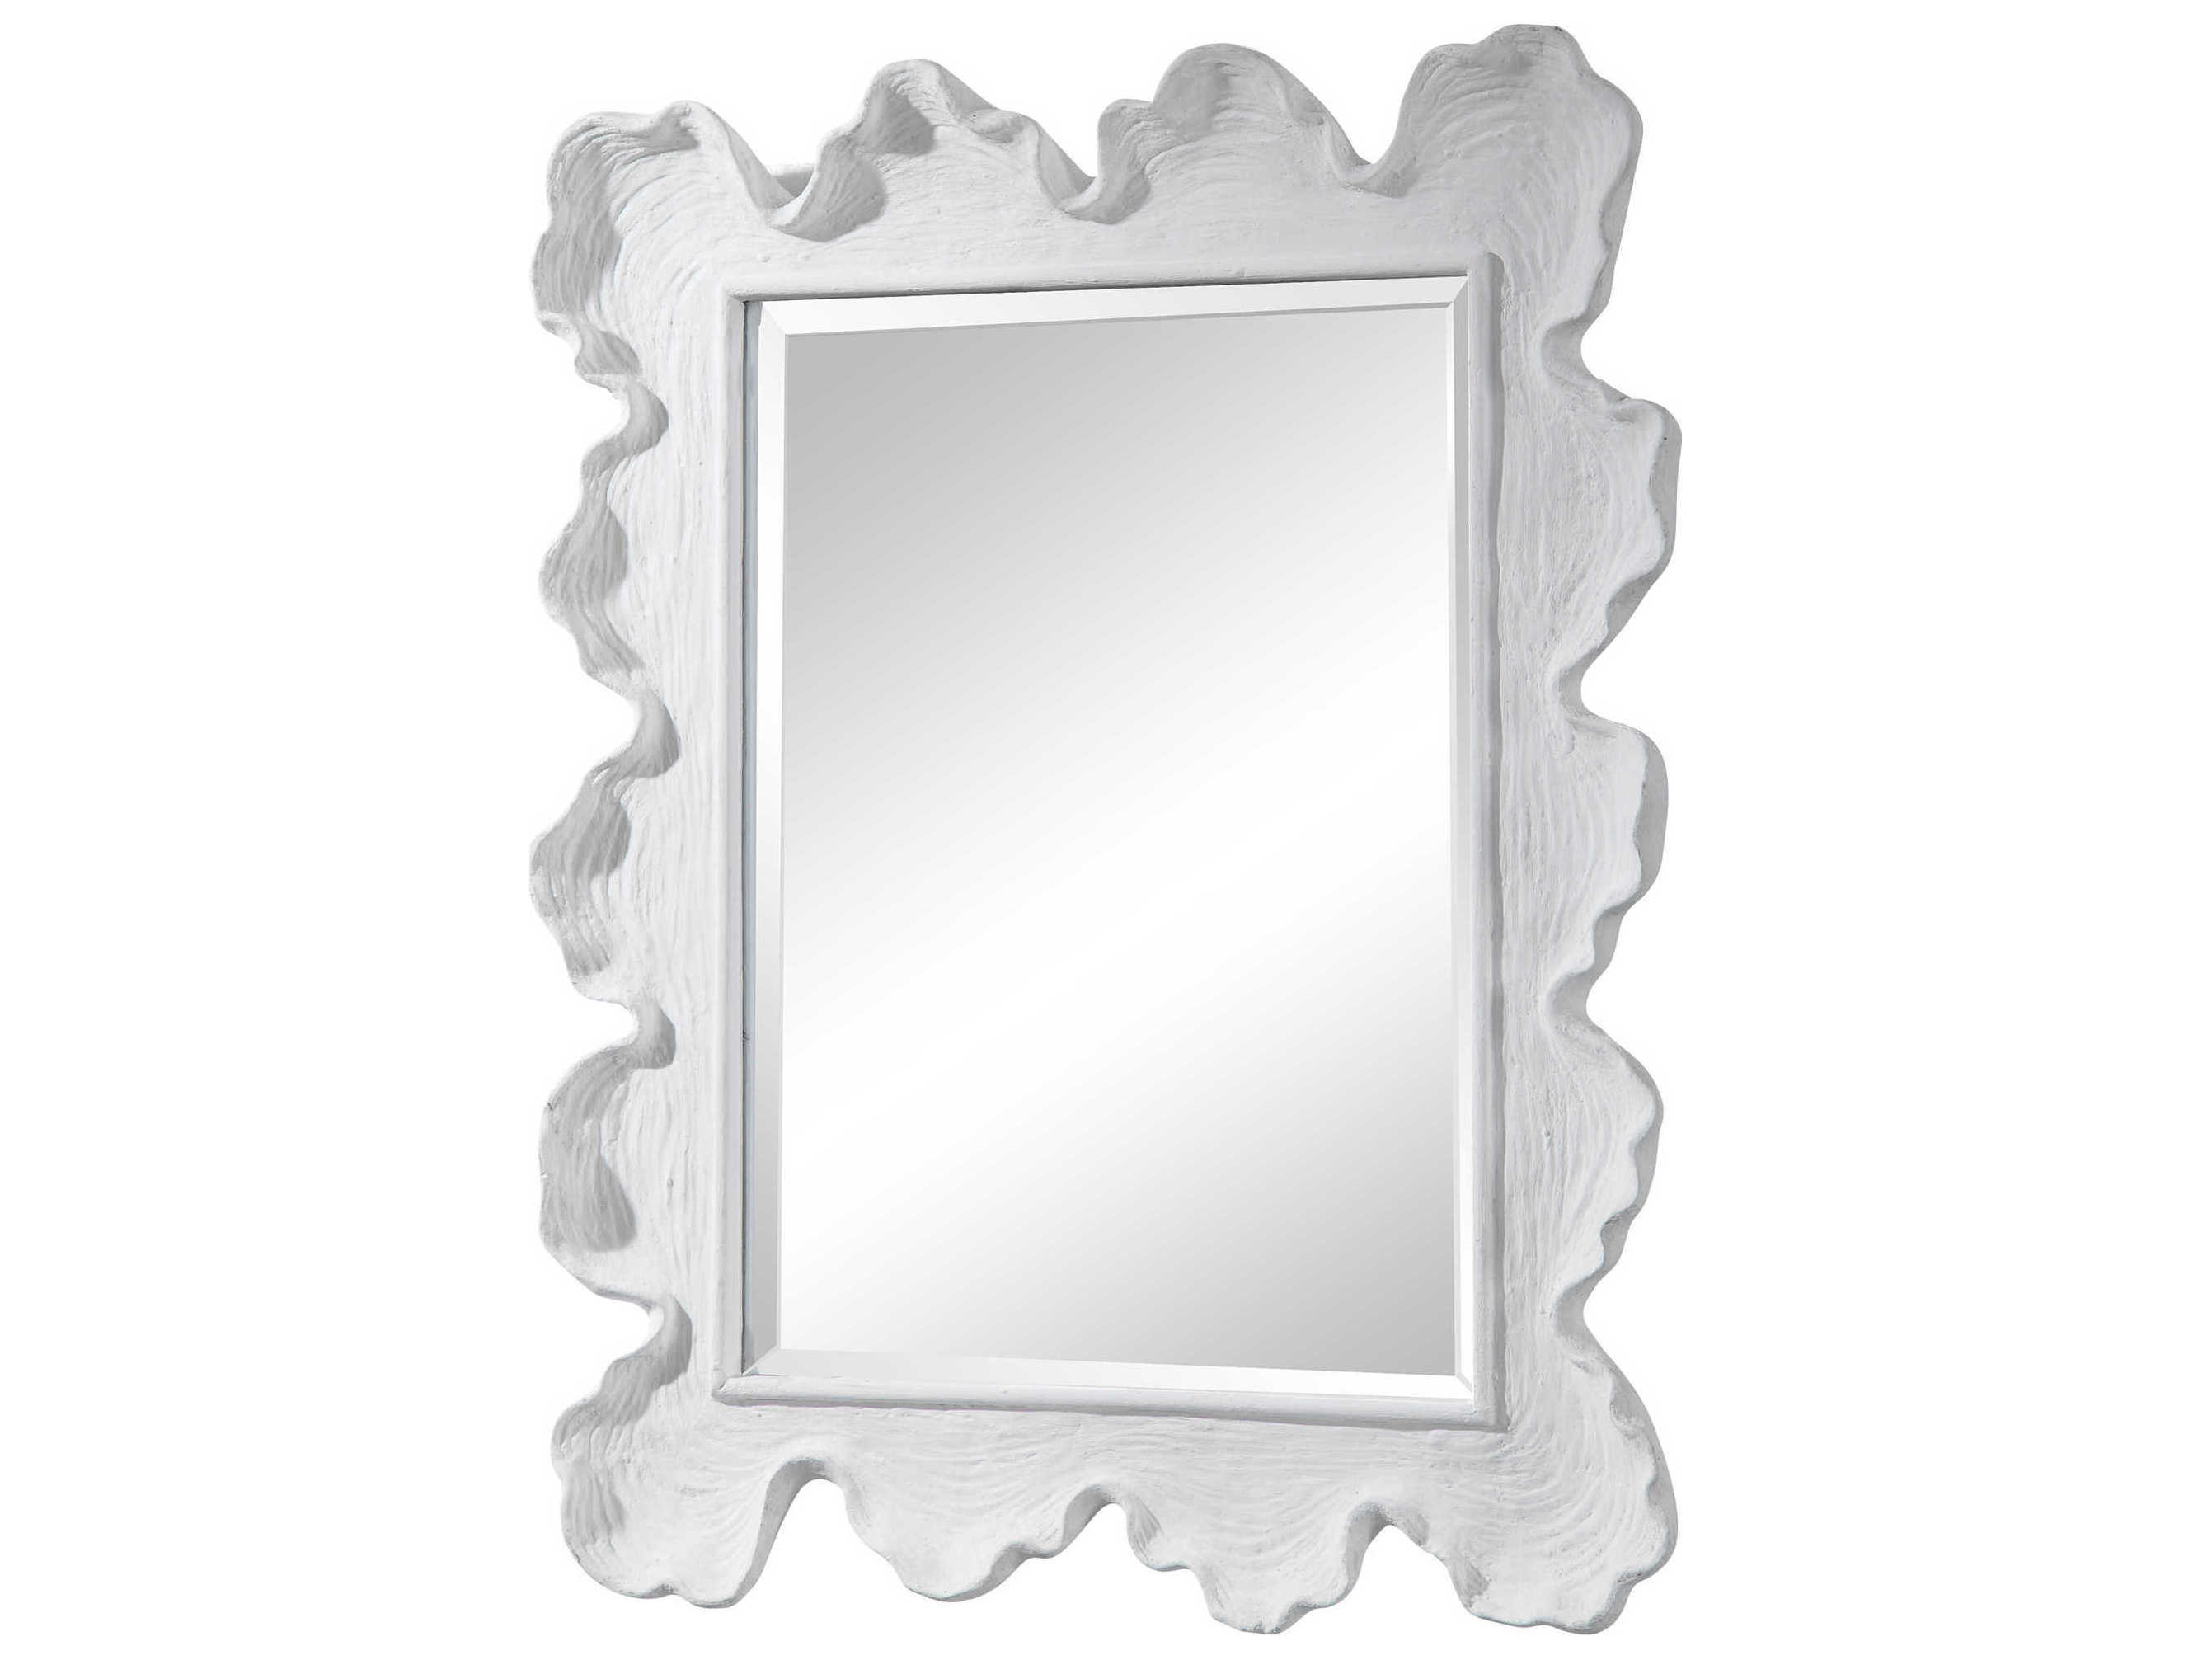 Bassett Mirror Above Board Round Wall Mirror in Round Mirrors at